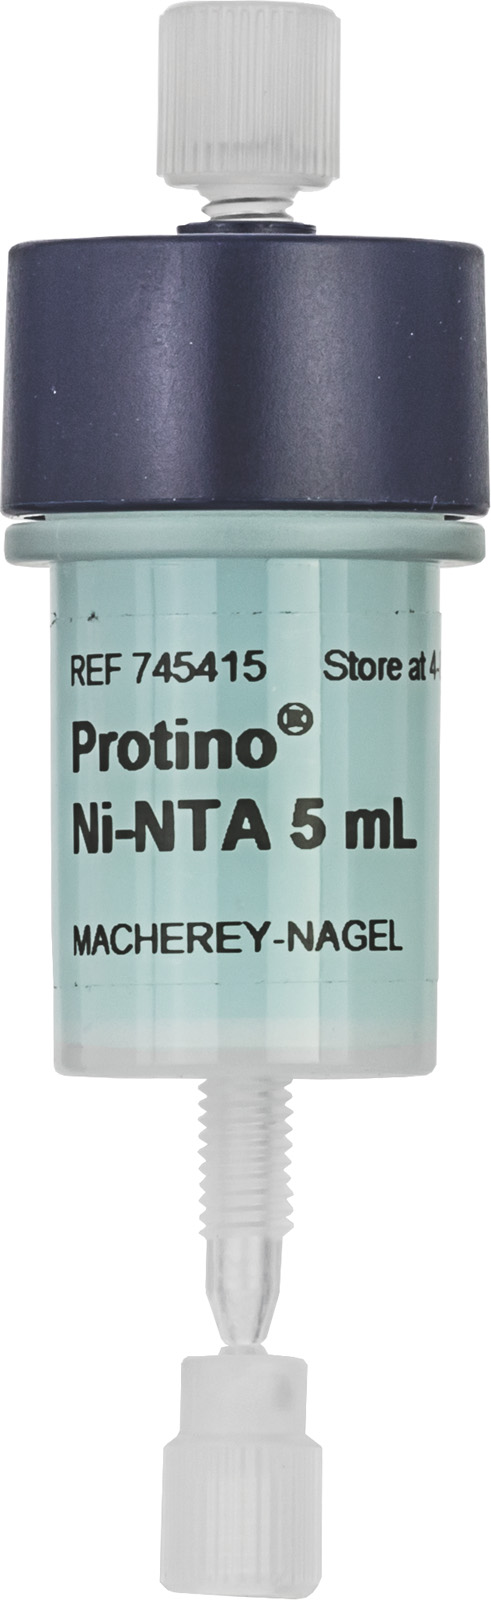 Oczyszczanie His-tag białek Kolumny FPLC™ Protino Ni-NTA Columns 5 mL